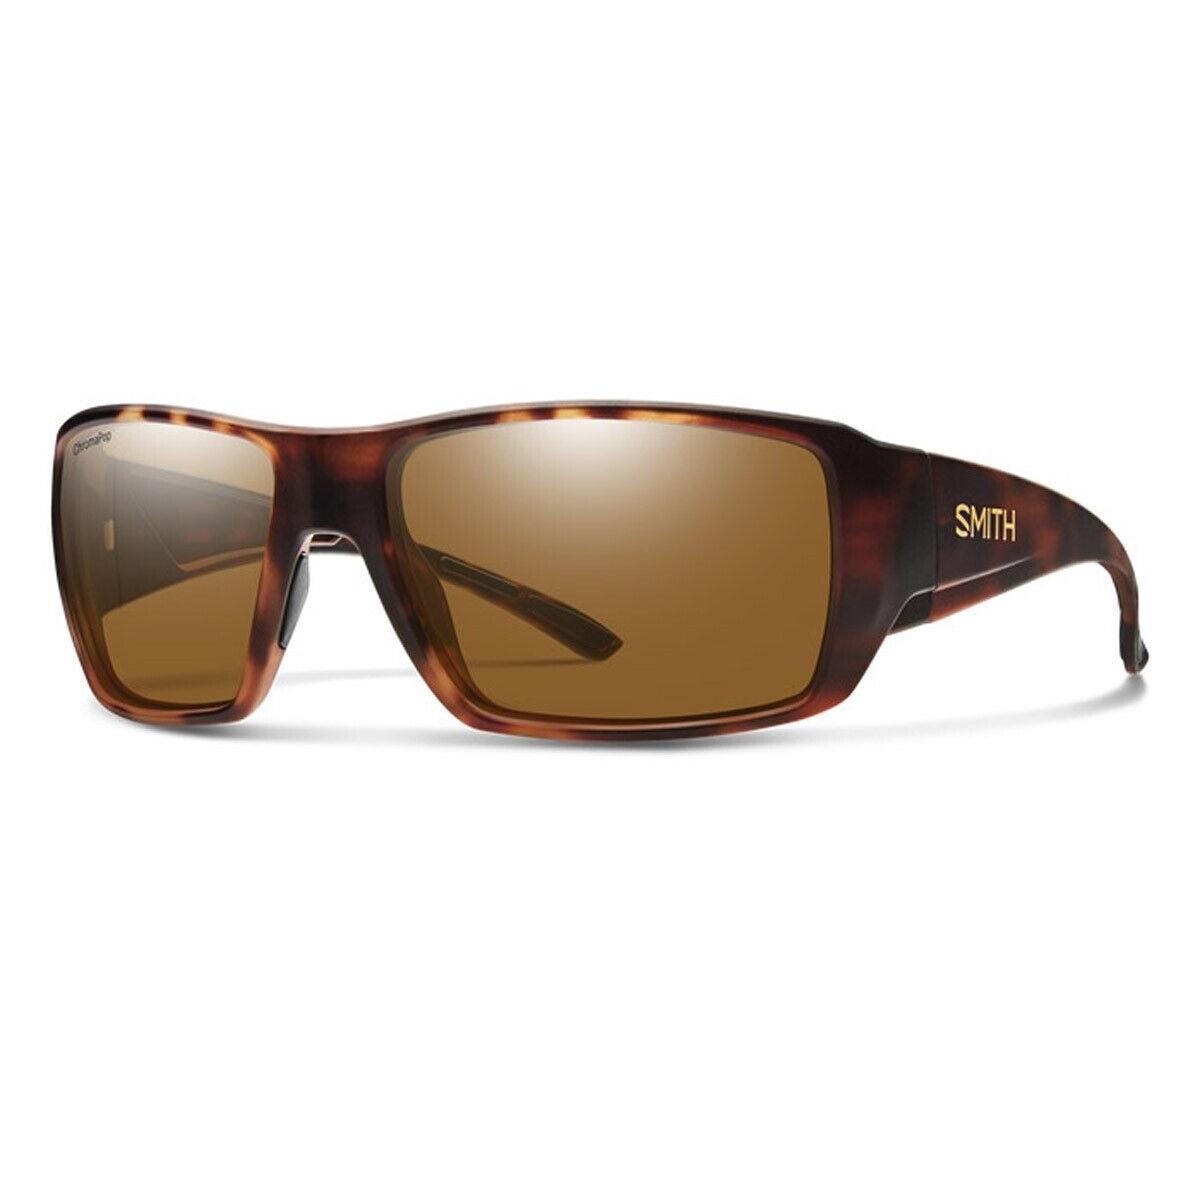 Smith Guides Choice XL Sunglasses Matte Havana Polarized Brown Glass Lenses